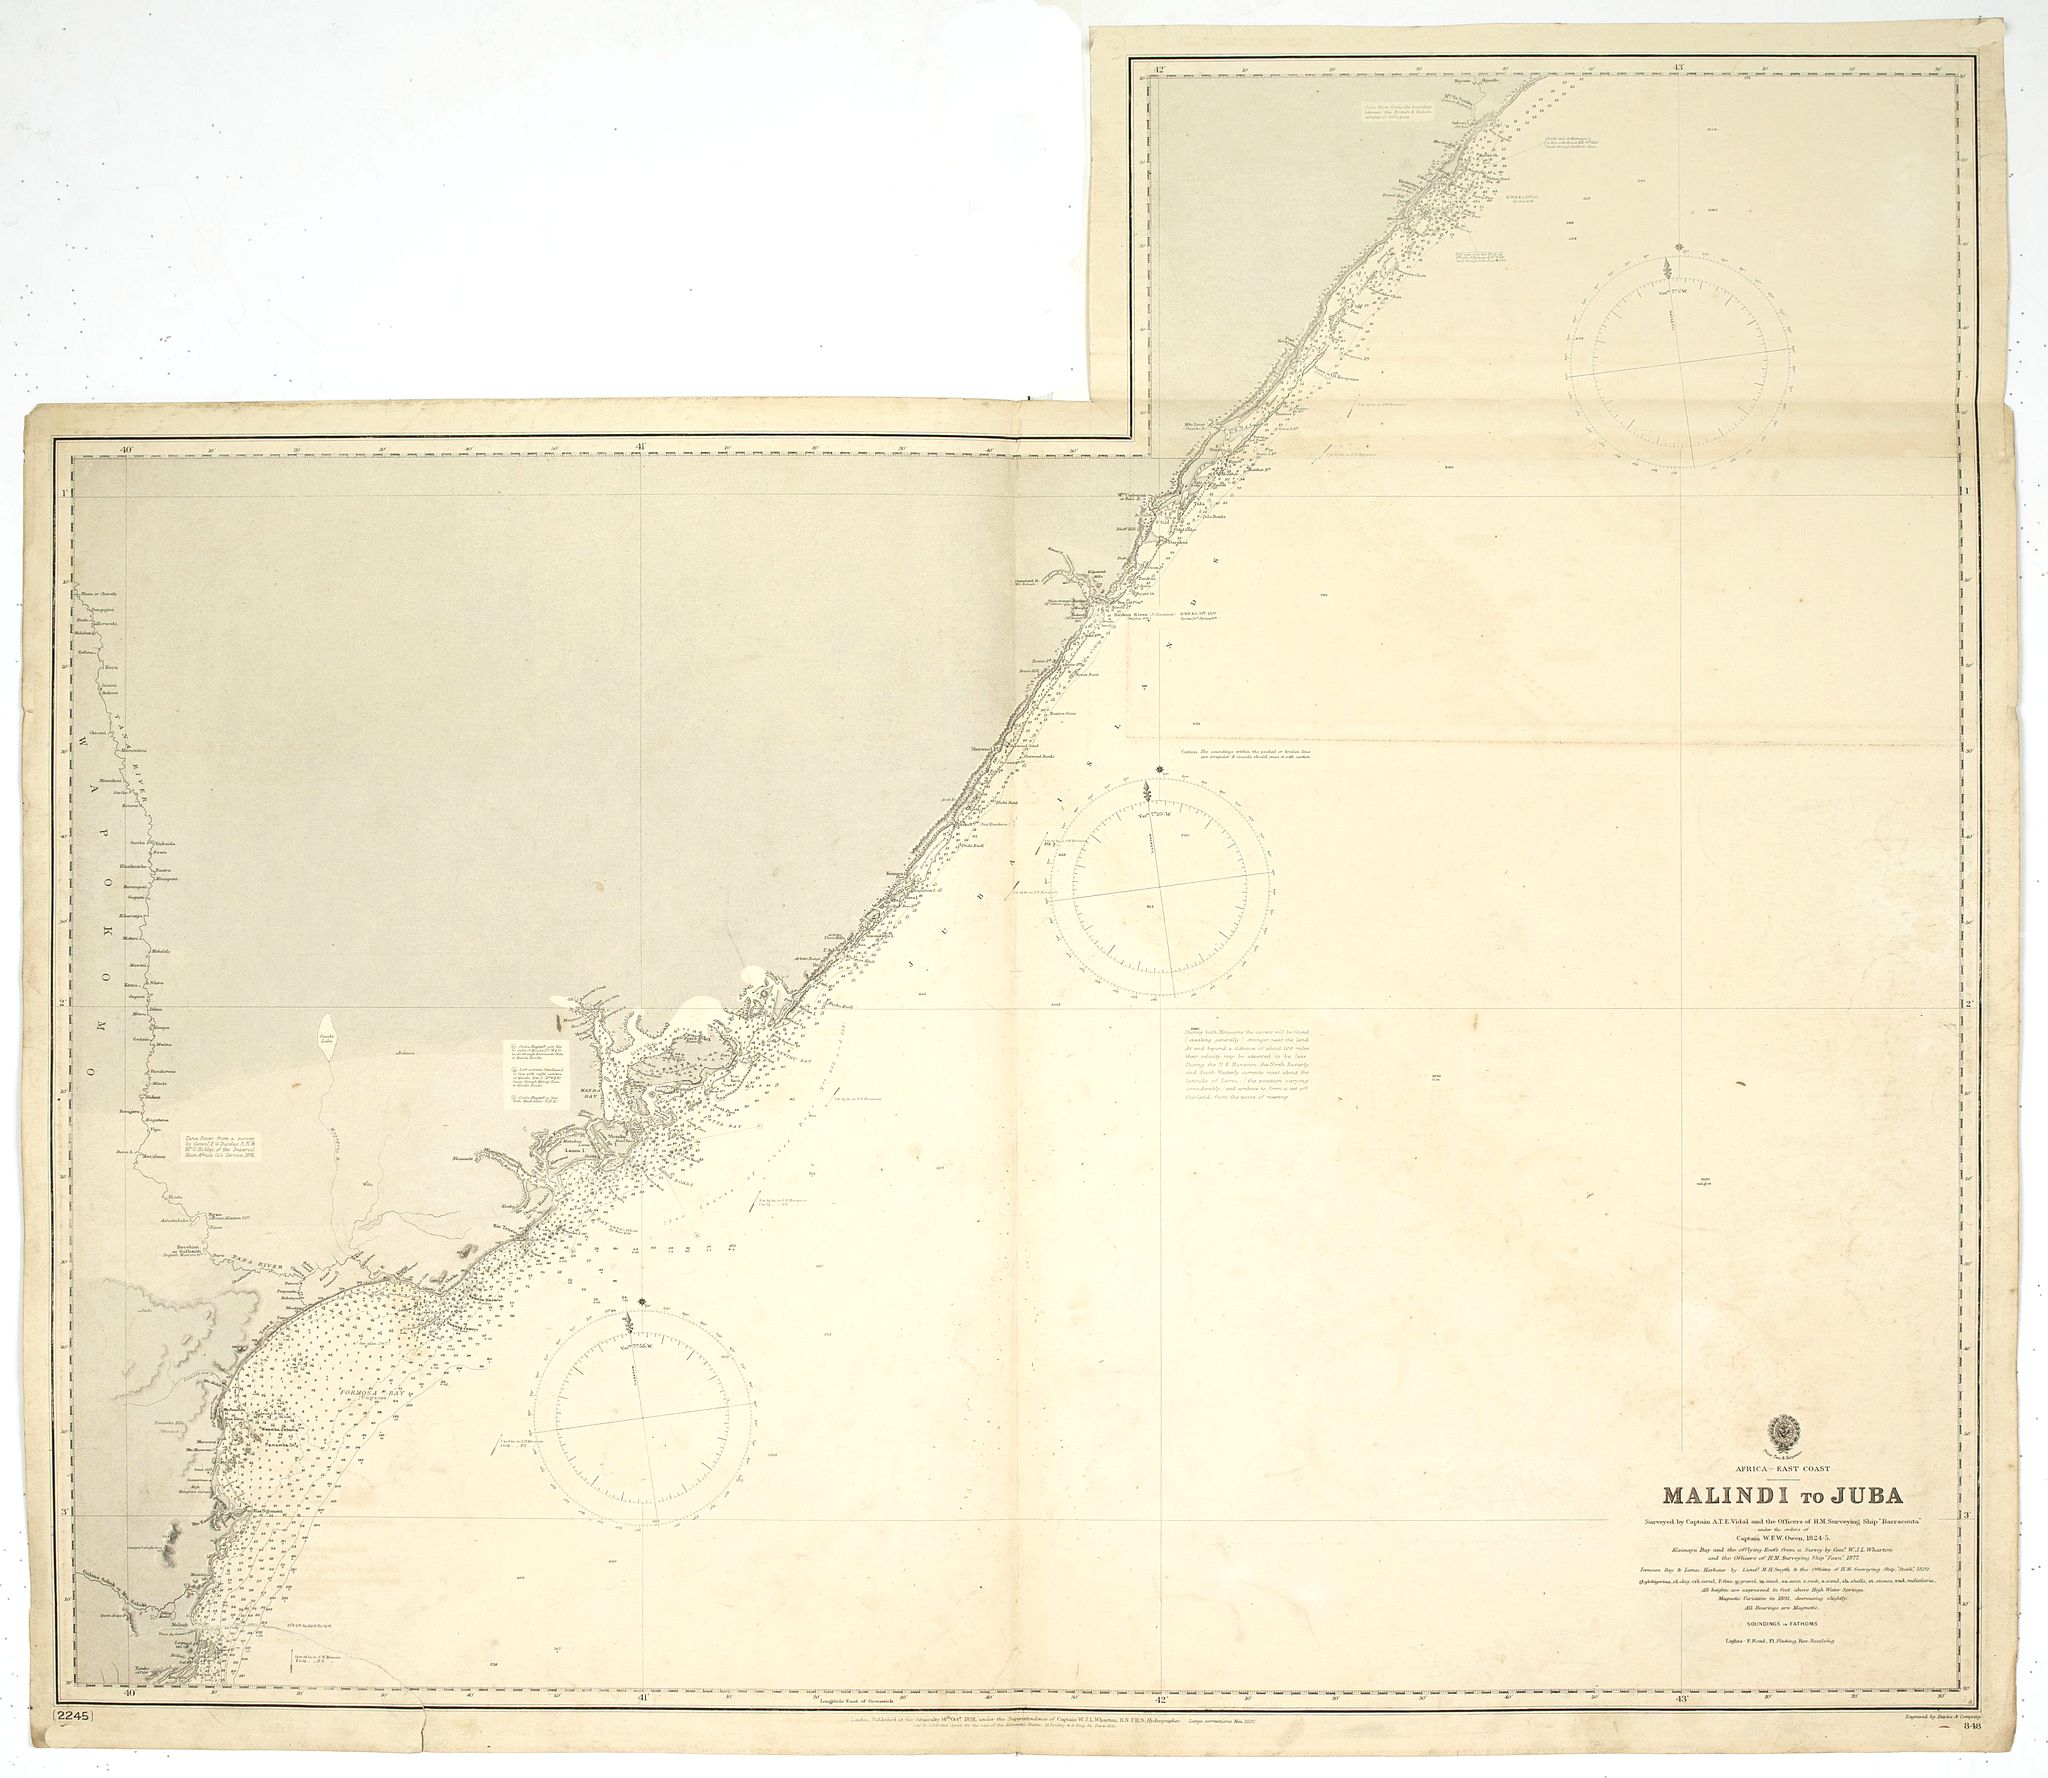 Africa east coast Malindi to Juba Surveyed by Captain  W. F. W. Owen,1824-25 Surveying ship